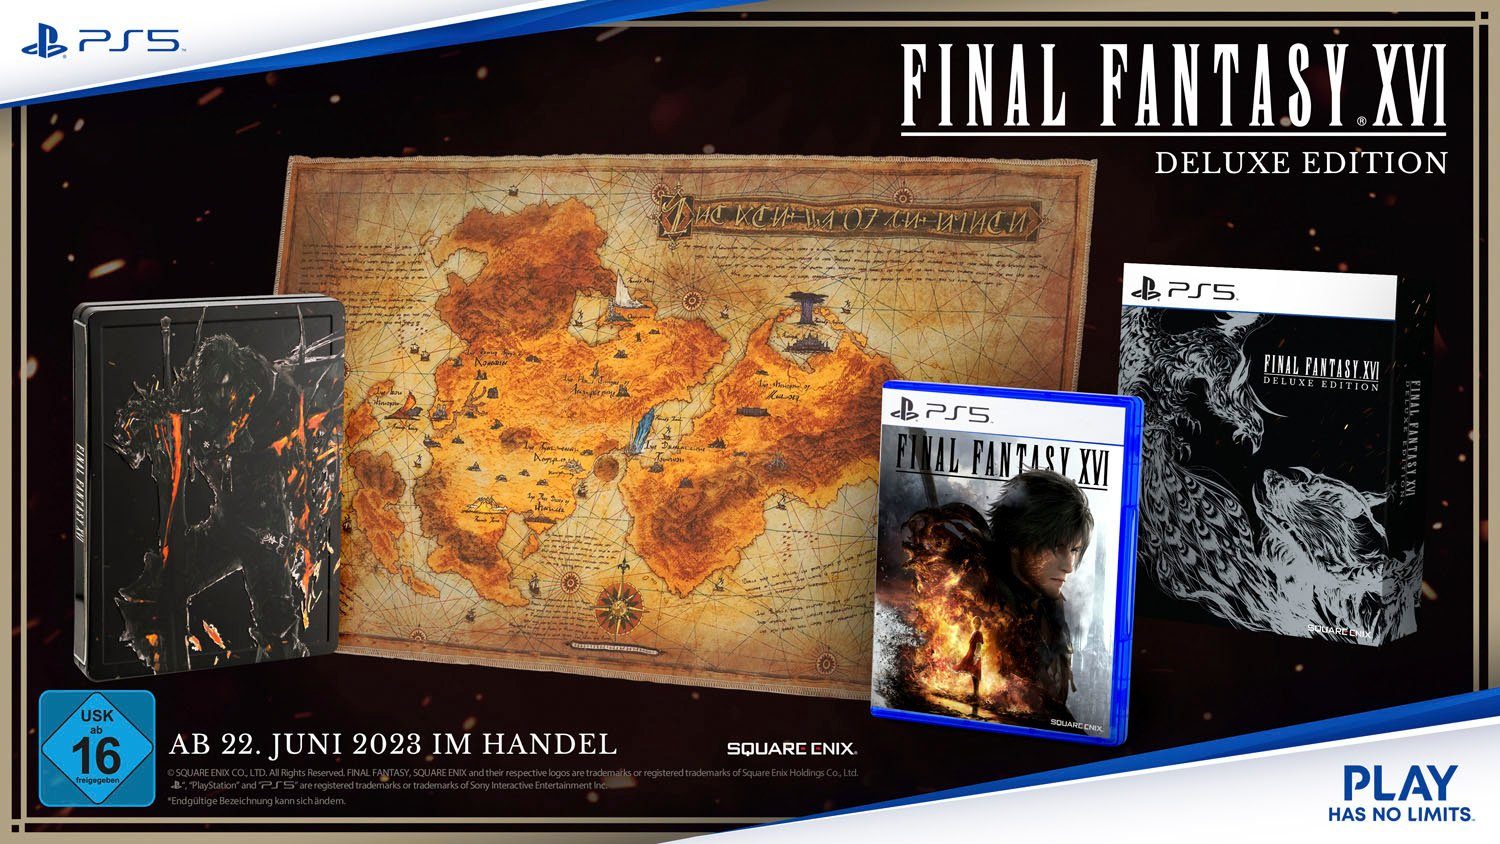 XVI SquareEnix Edition Deluxe PlayStation 5 Fantasy Final